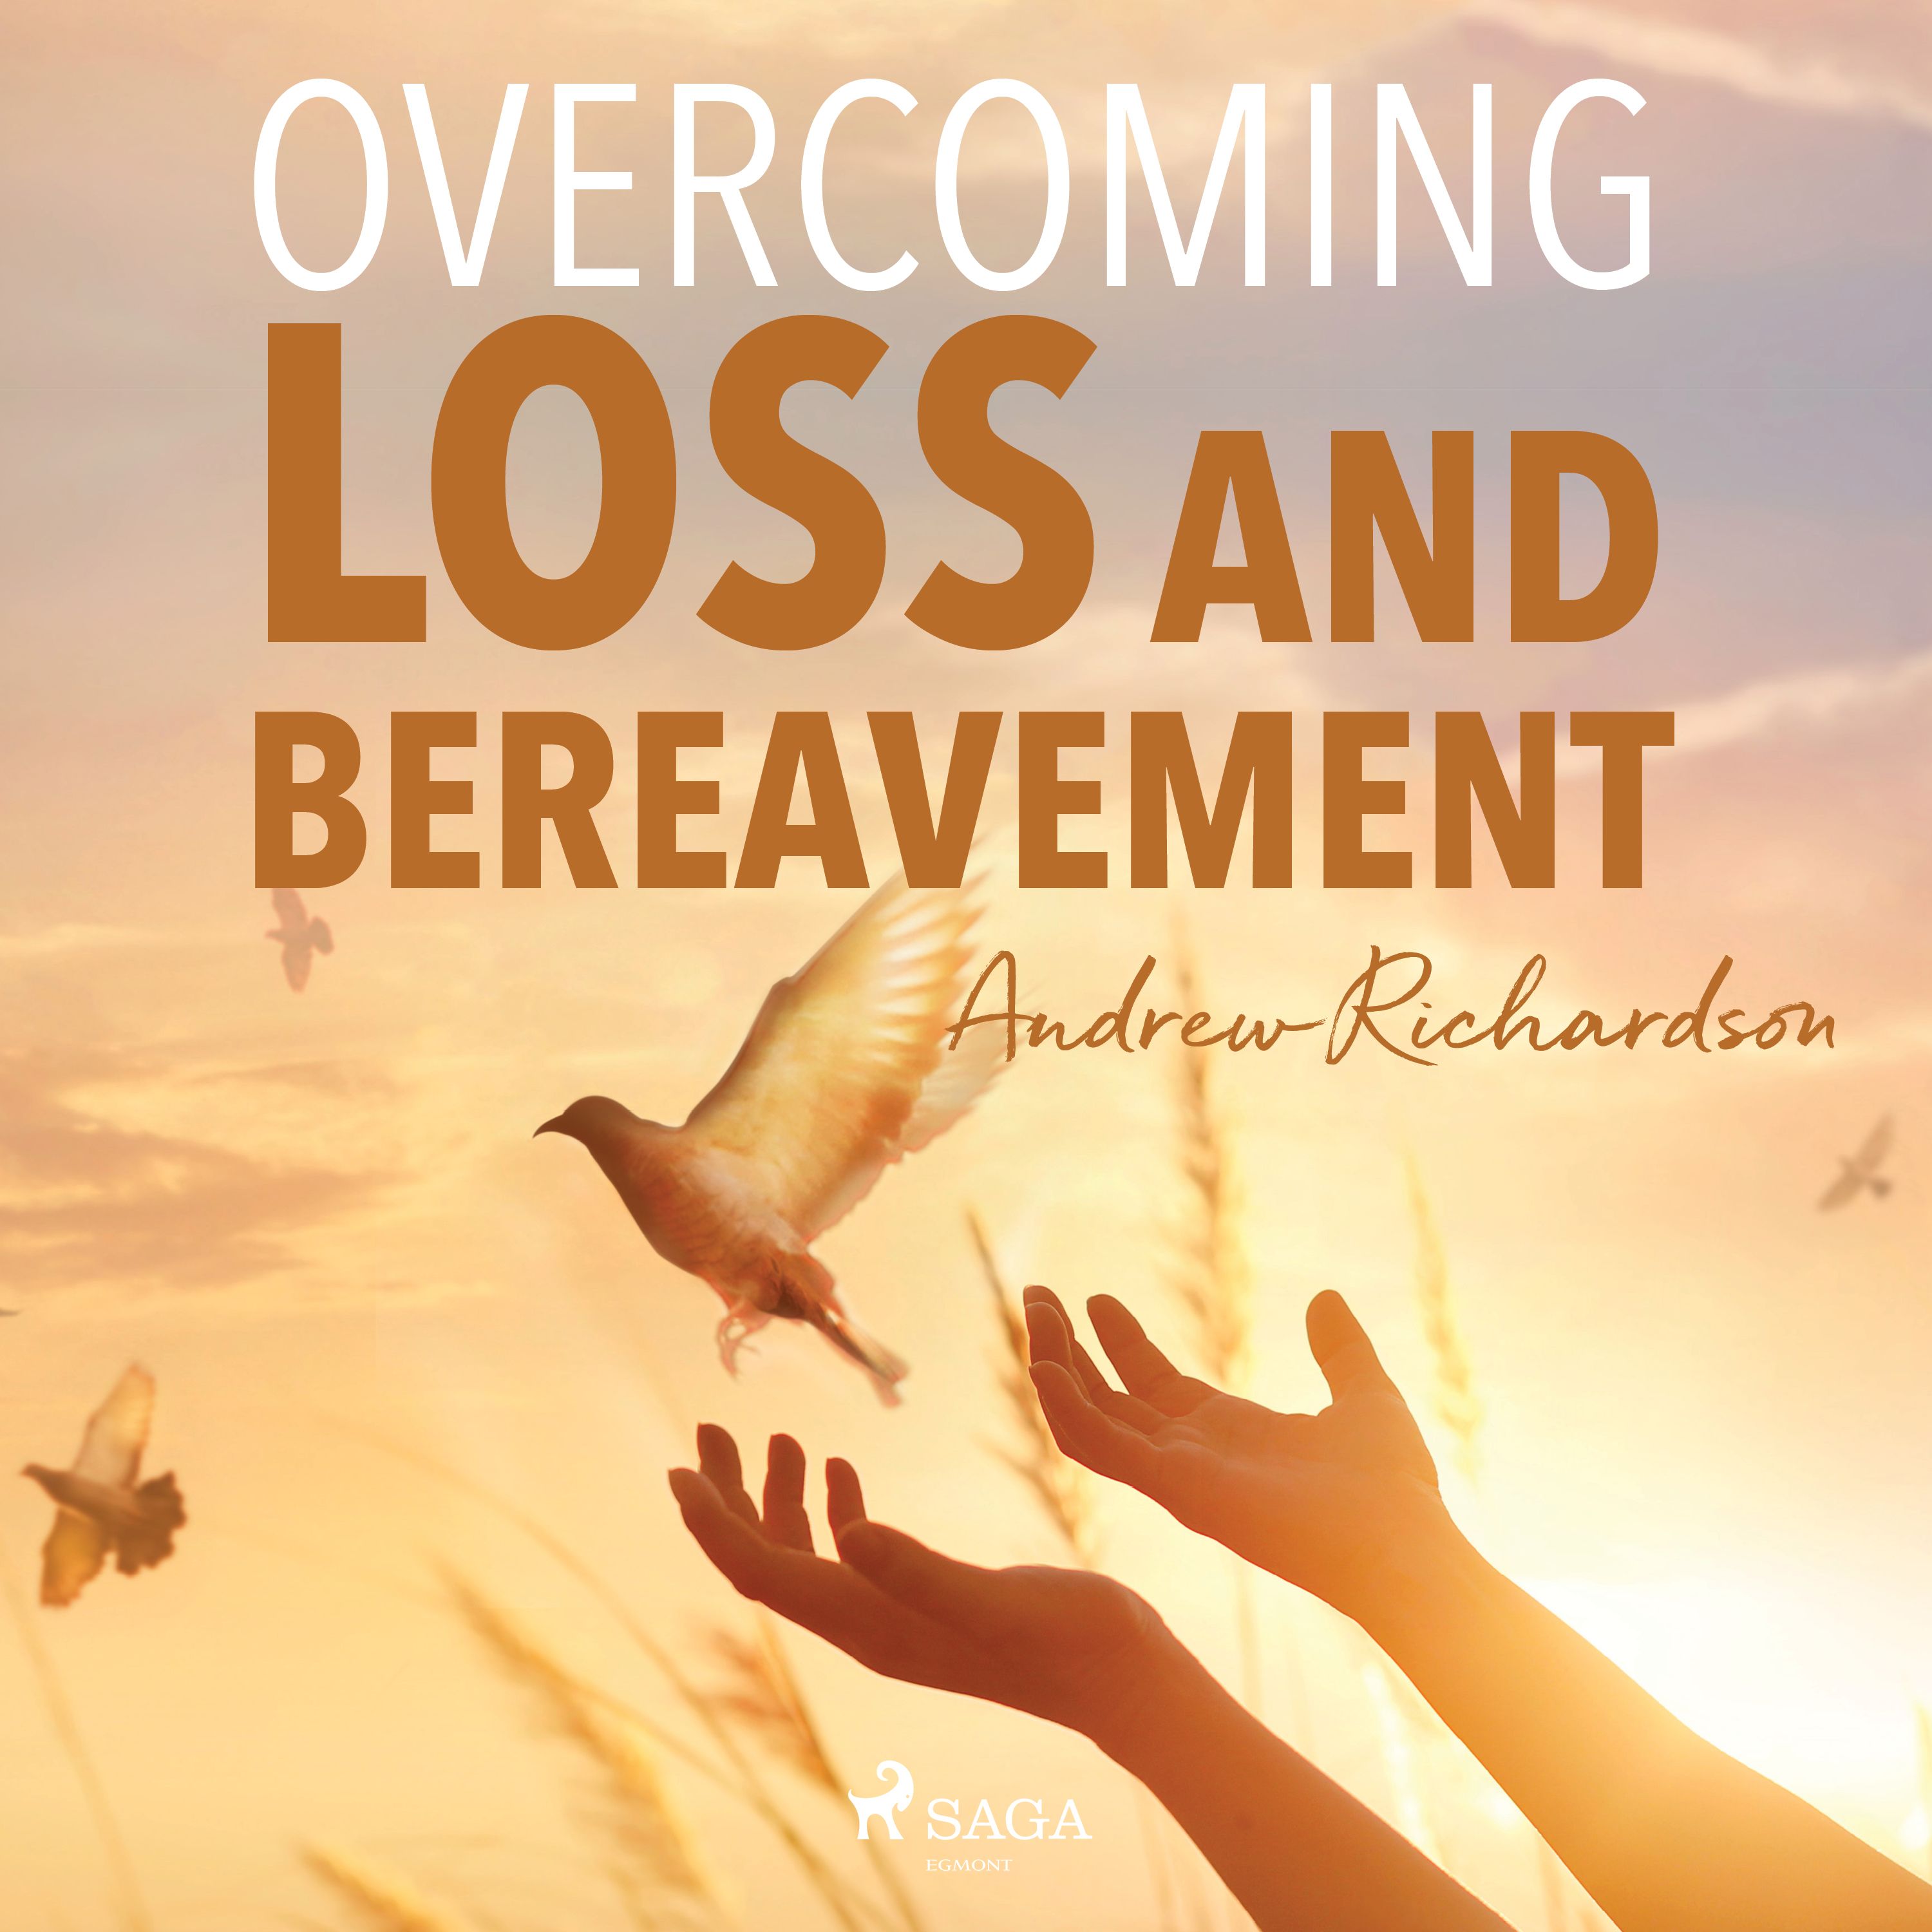 Overcoming Loss and Bereavement, ljudbok av Andrew Richardson